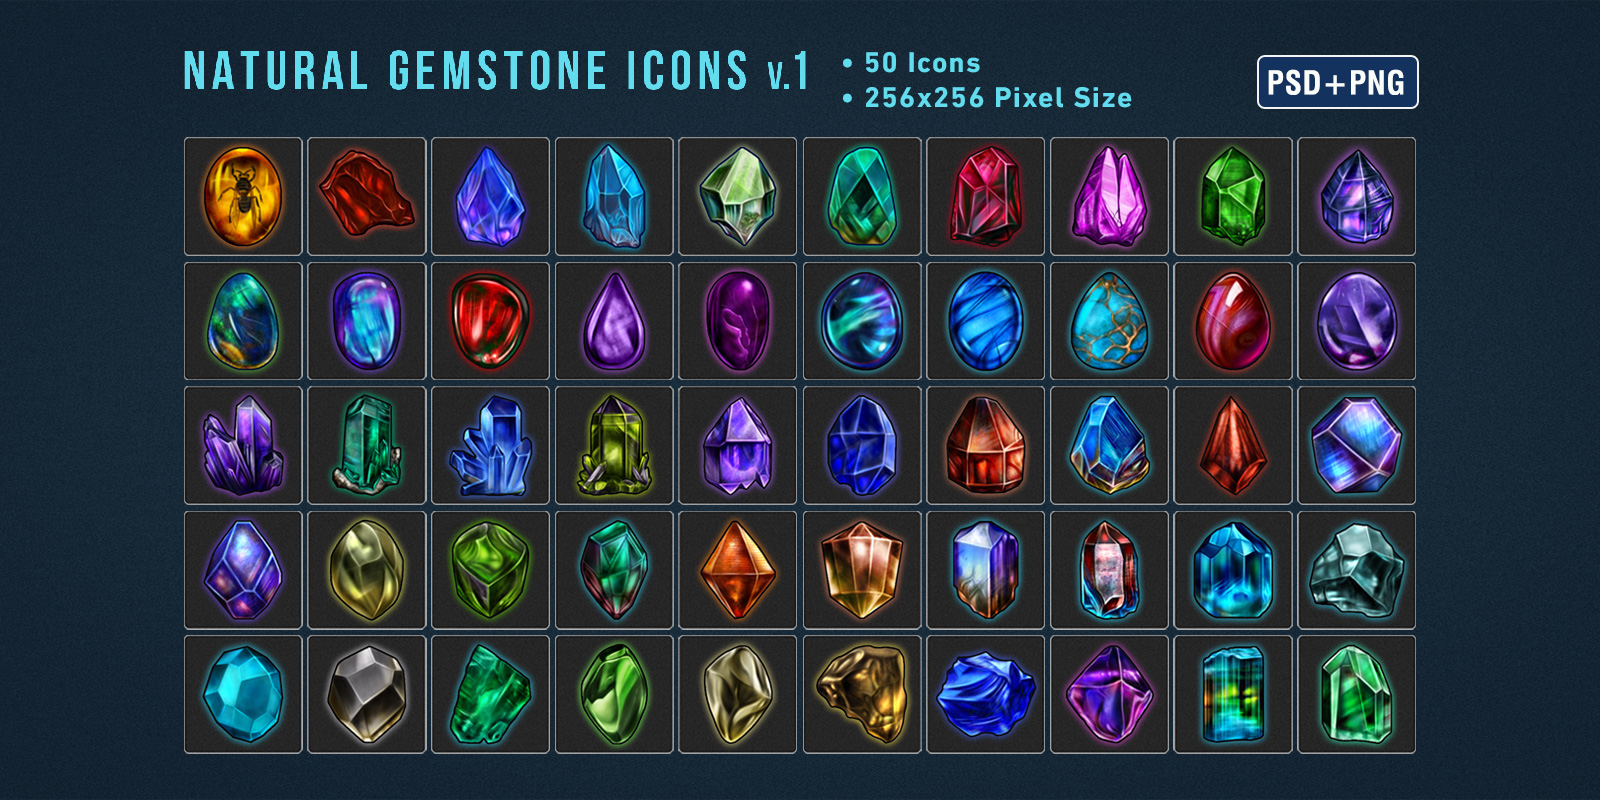 Natural Gemstone Icons v.1